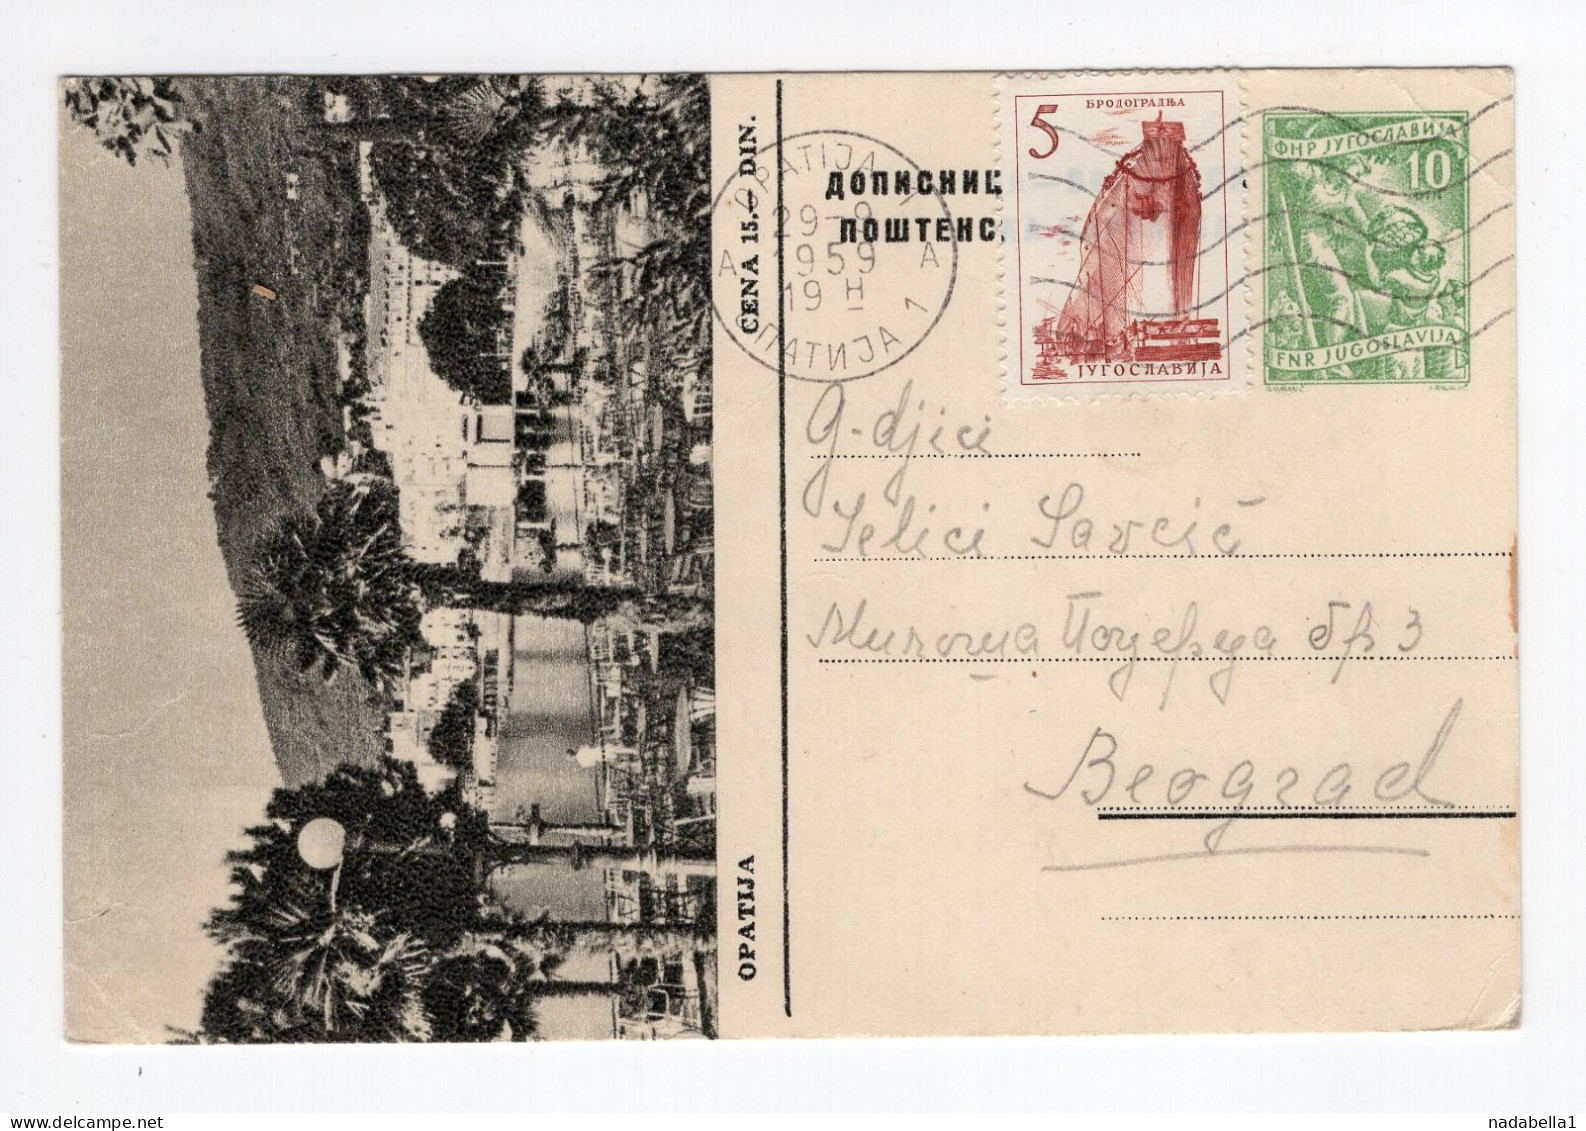 1959. YUGOSLAVIA,CROATIA,OPATIJA,10 DIN. ILLUSTRATED STATIONERY CARD,USED - Postal Stationery